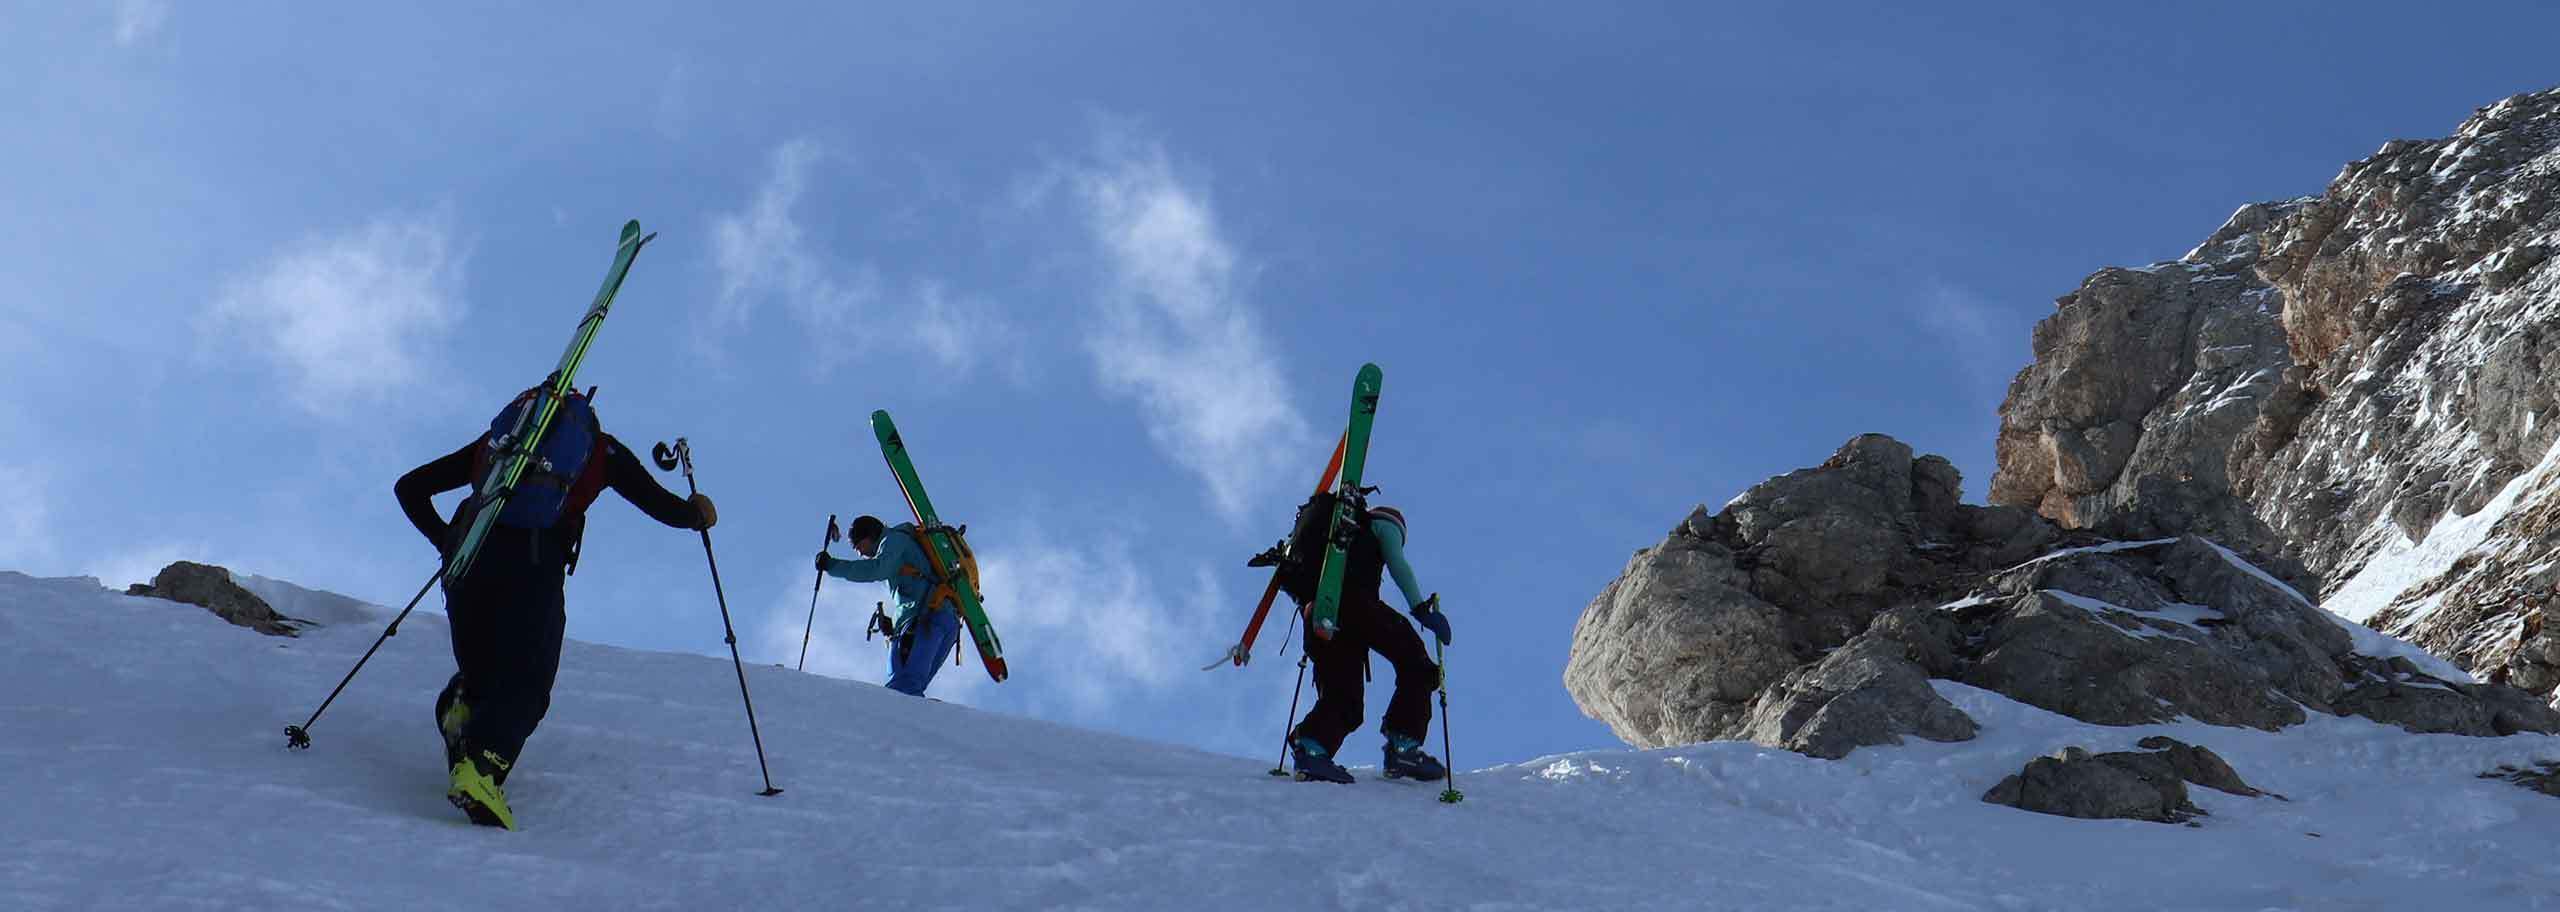 Ski Mountaineering in Pragelato with a Mountain Guide